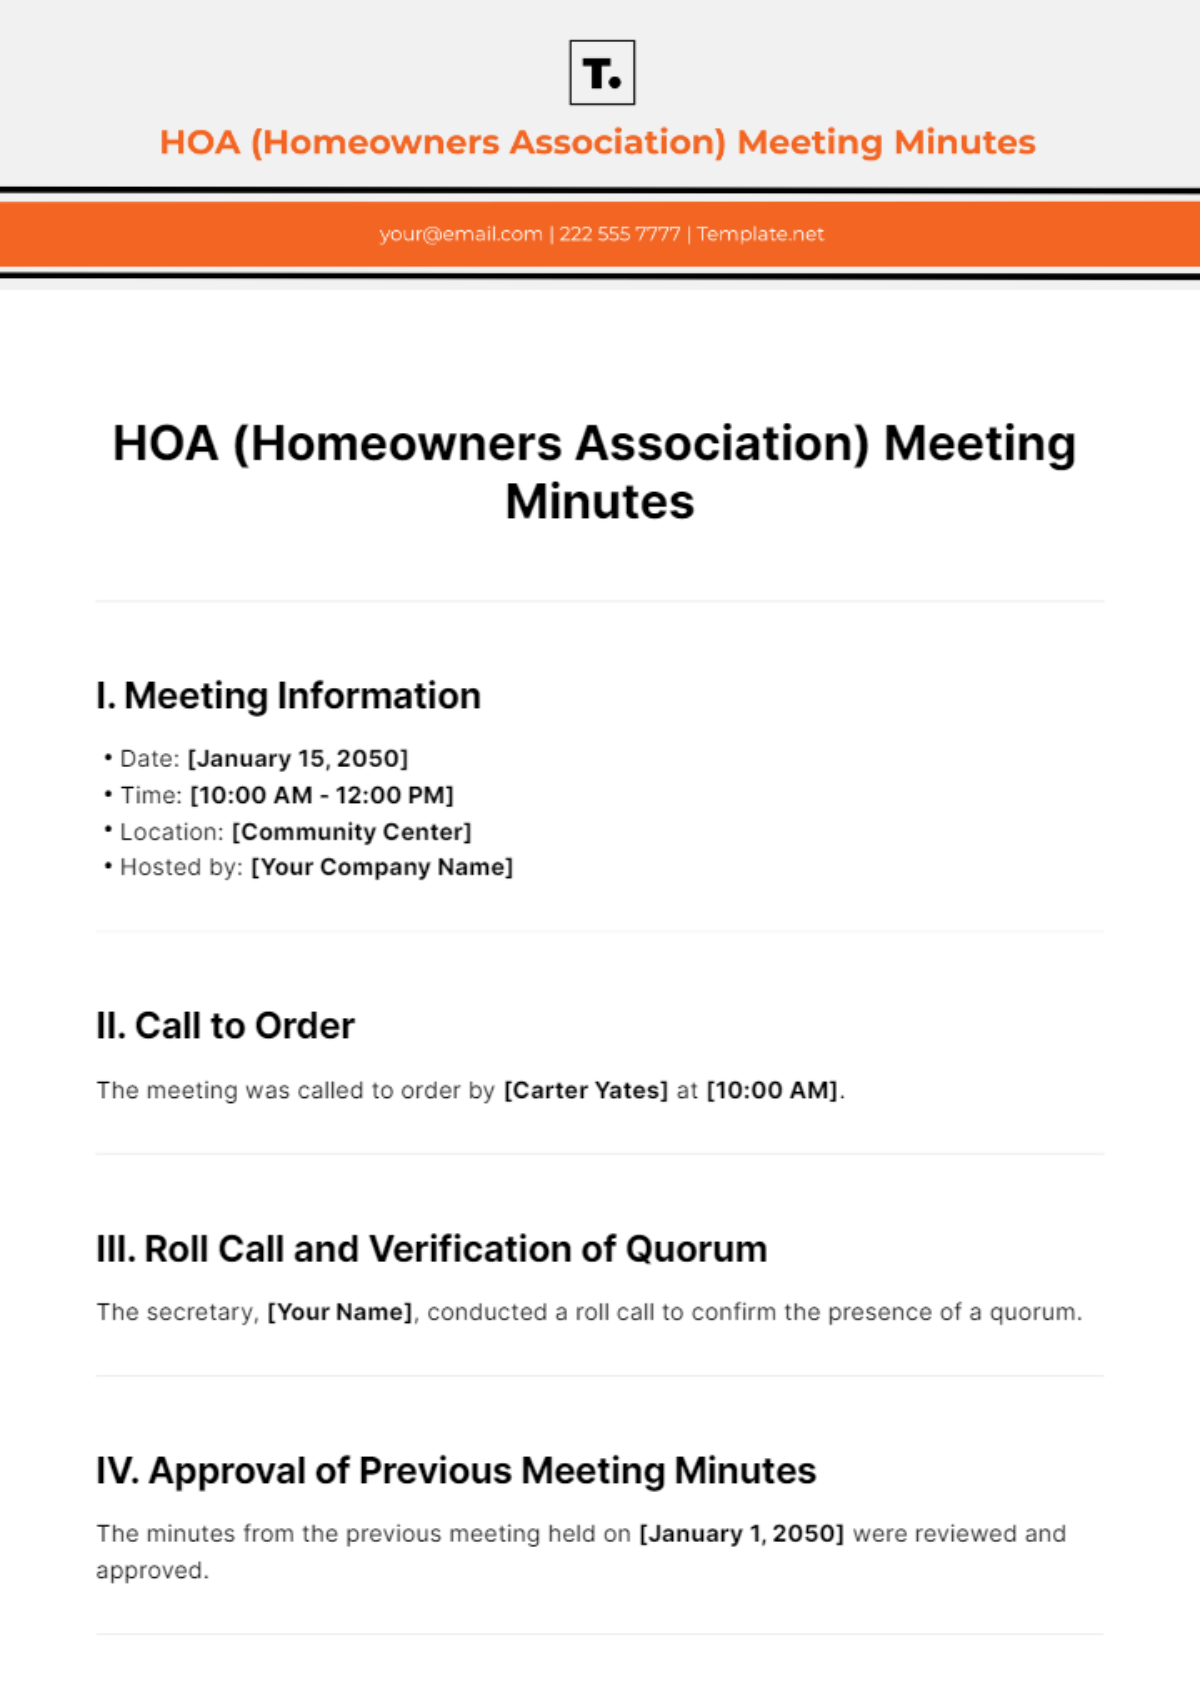 HOA (Homeowners Association) Meeting Minutes Template